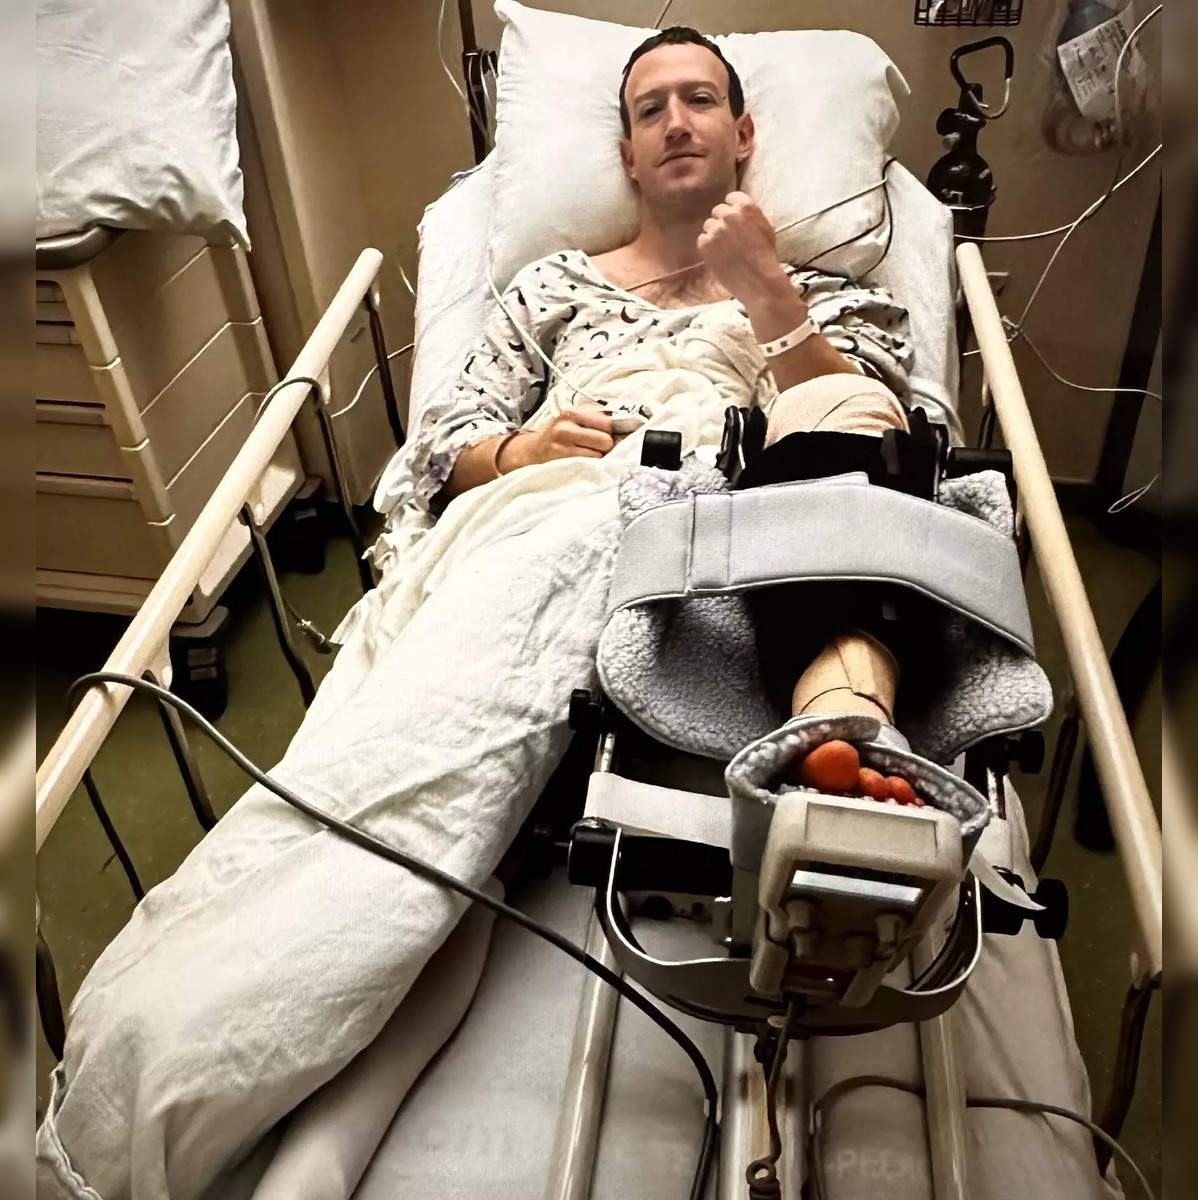 mark-zuckerberg-undergoes-surgery-for-ligament-injury-during-mma-training.jpg